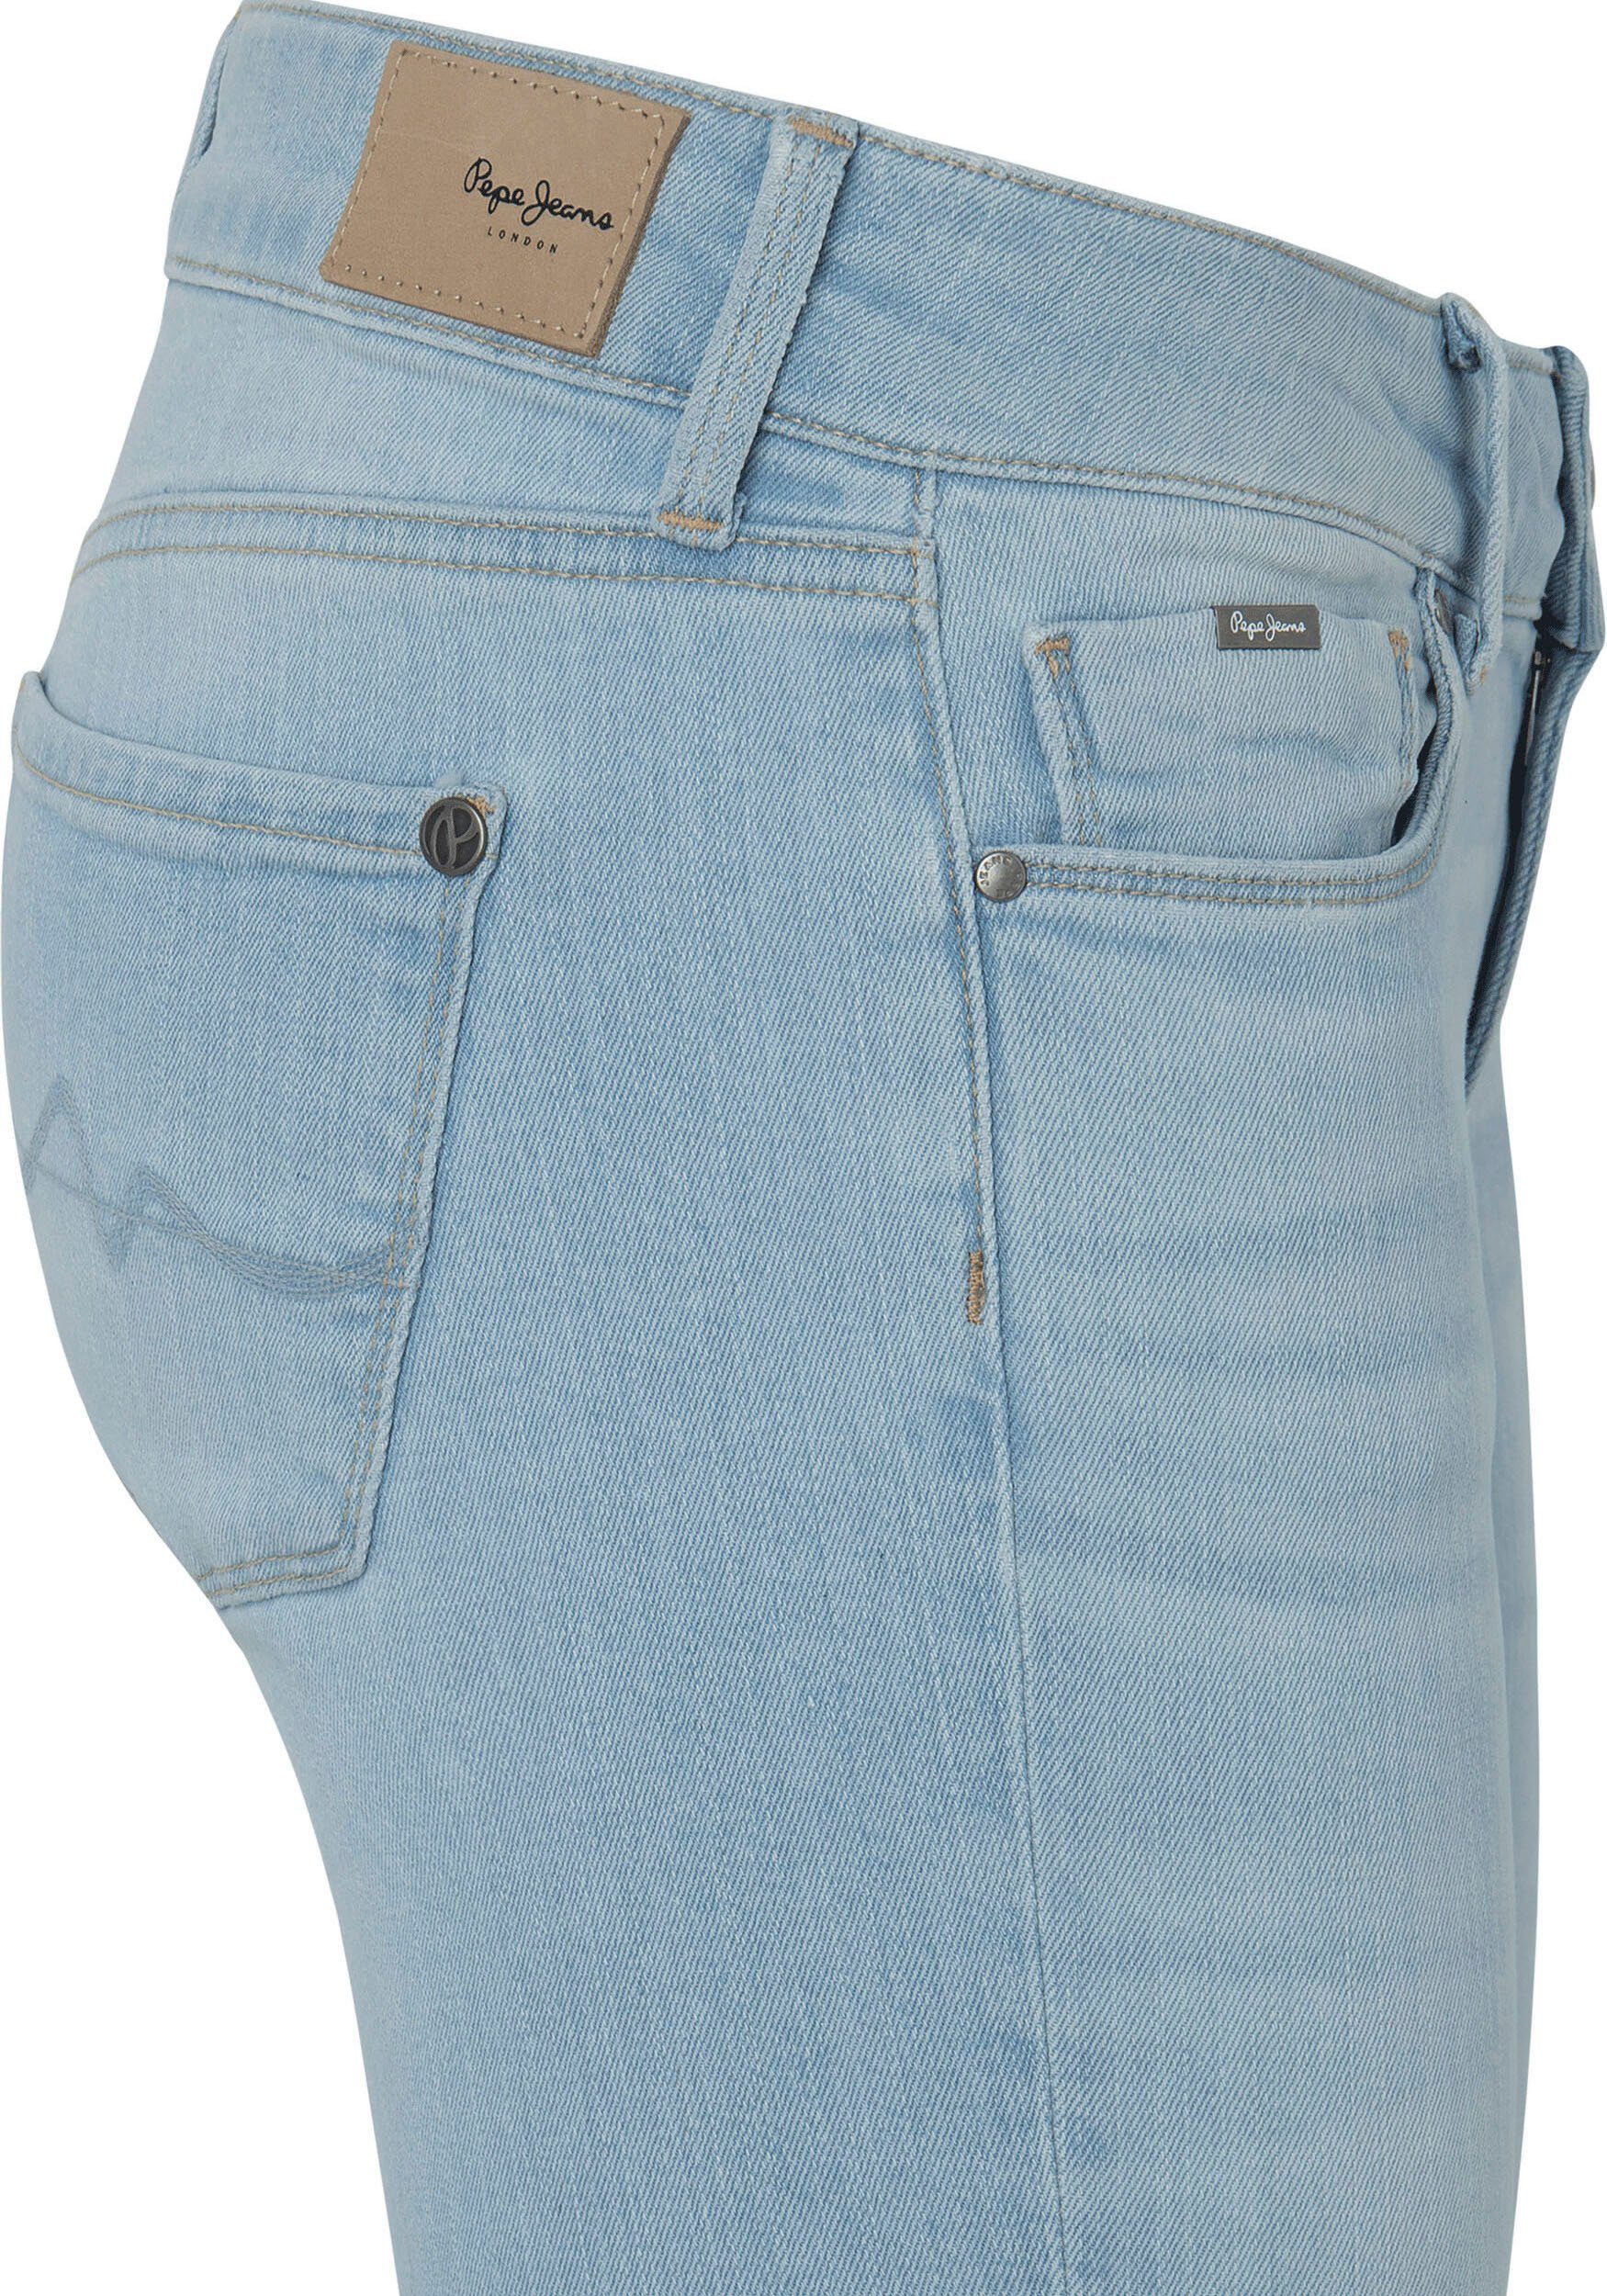 Bund 5-Pocket-Stil hell Pepe 1-Knopf Stretch-Anteil und Skinny-fit-Jeans mit Jeans SOHO im